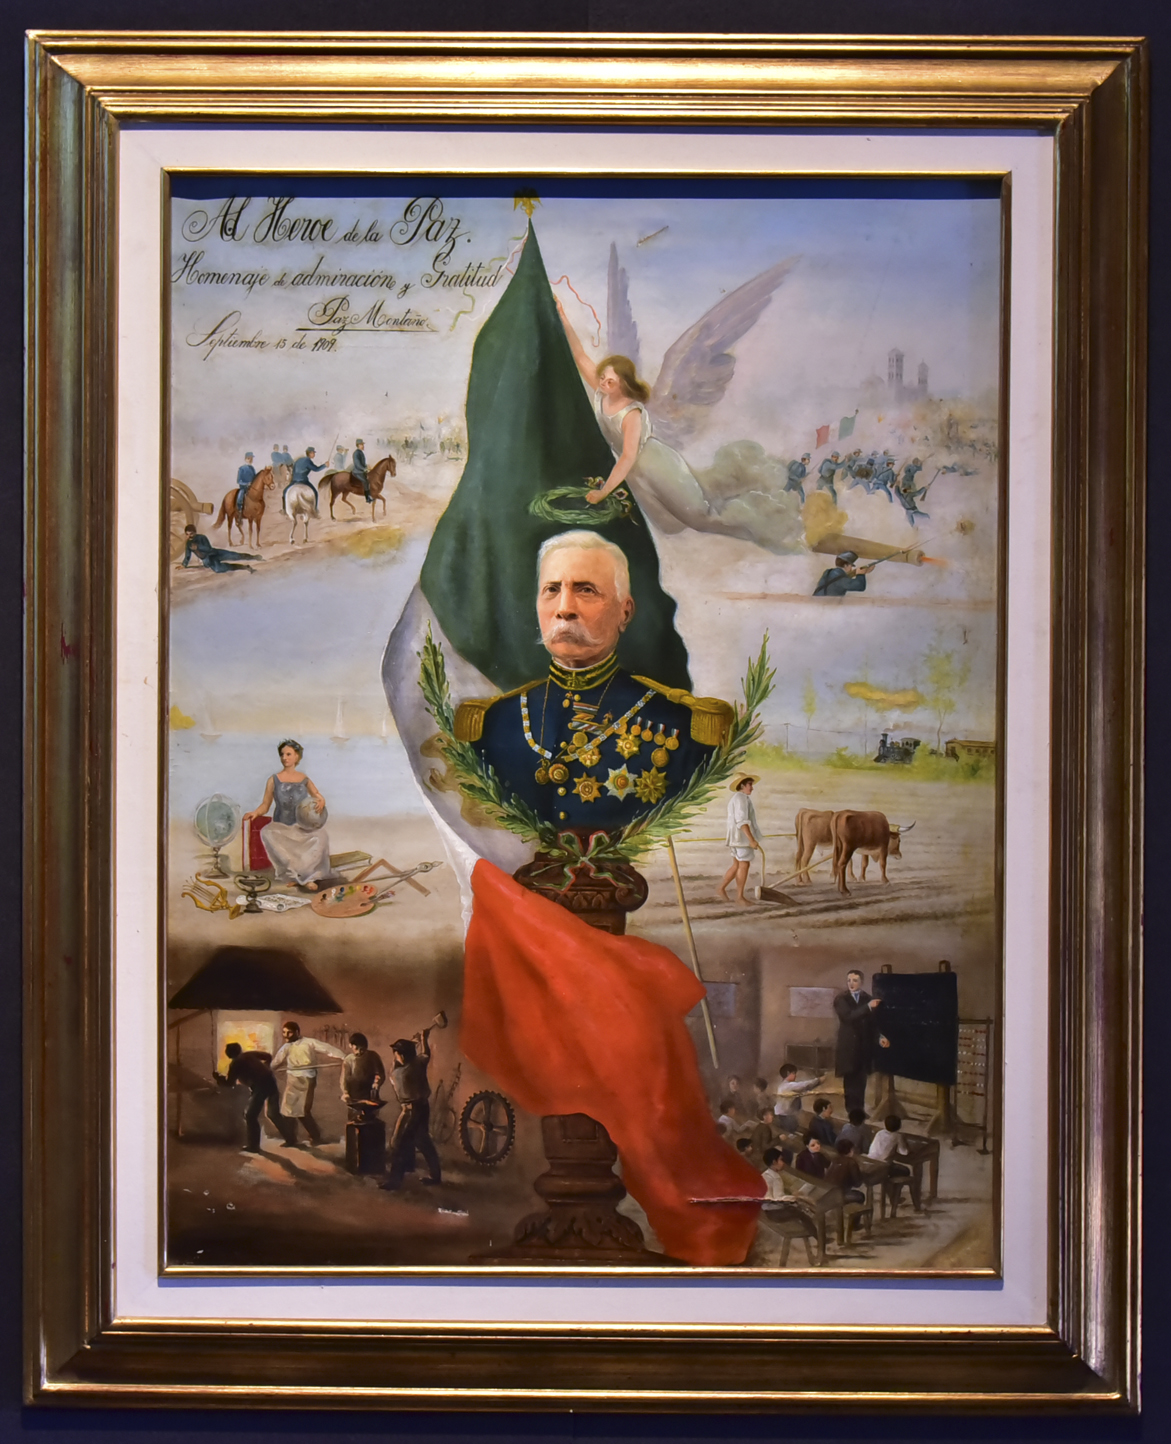 Al héroe de la Paz. Porfirio Díaz. Paz Montaño. 1909